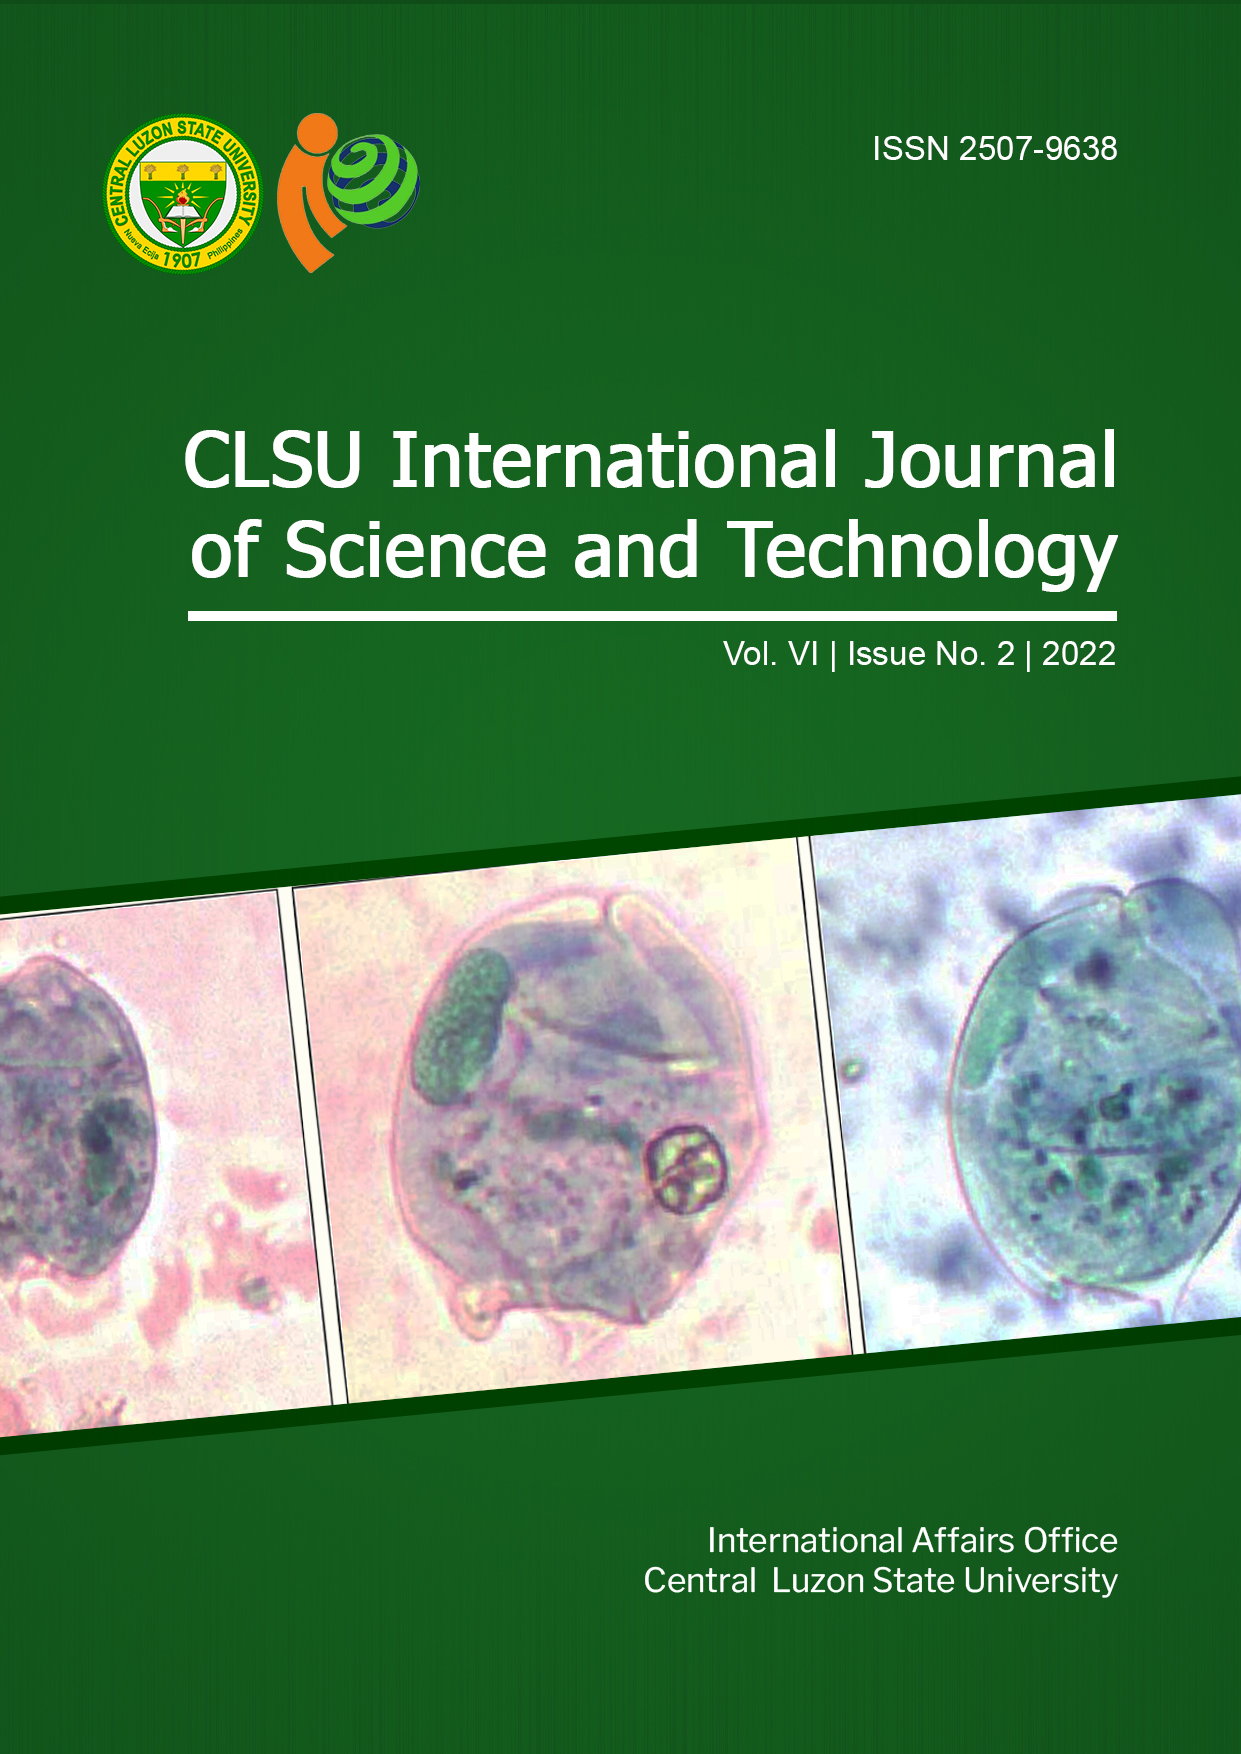 					View Vol. 6 No. 2 (2022): CLSU International Journal of Science & Technology (2022)
				